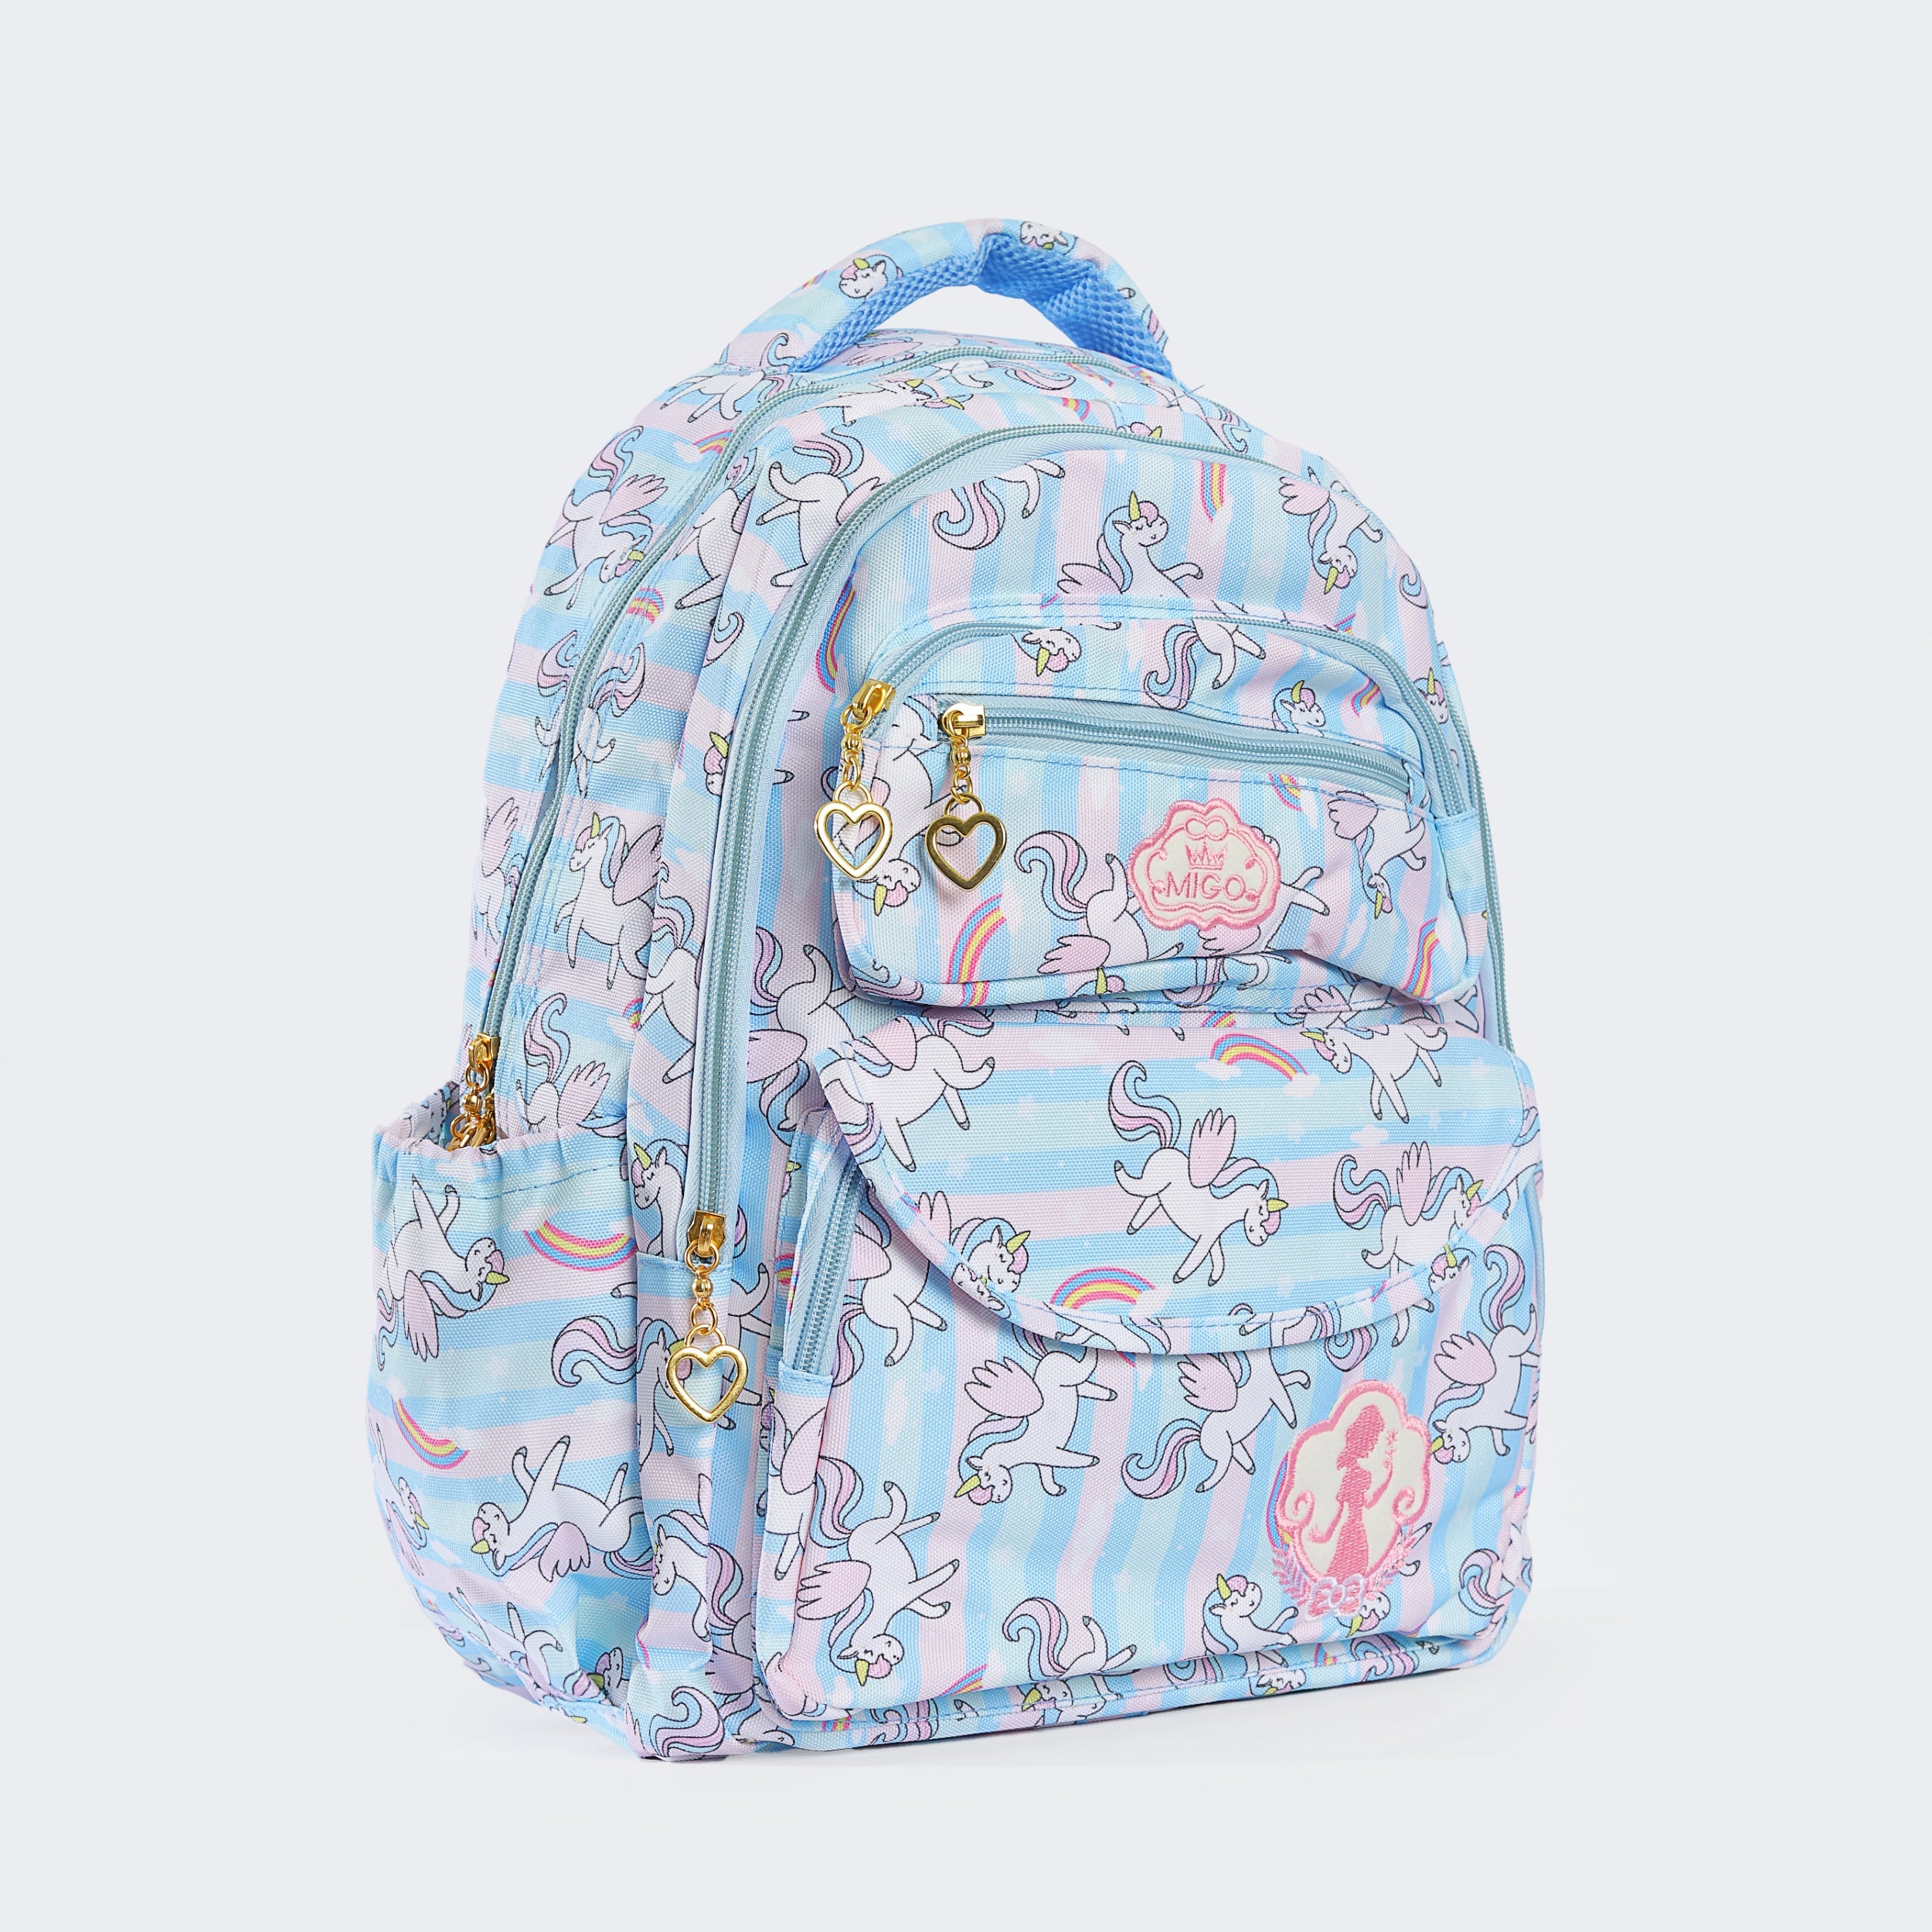 Baby Blue Fantasy School Bag For Kids 18 INCH